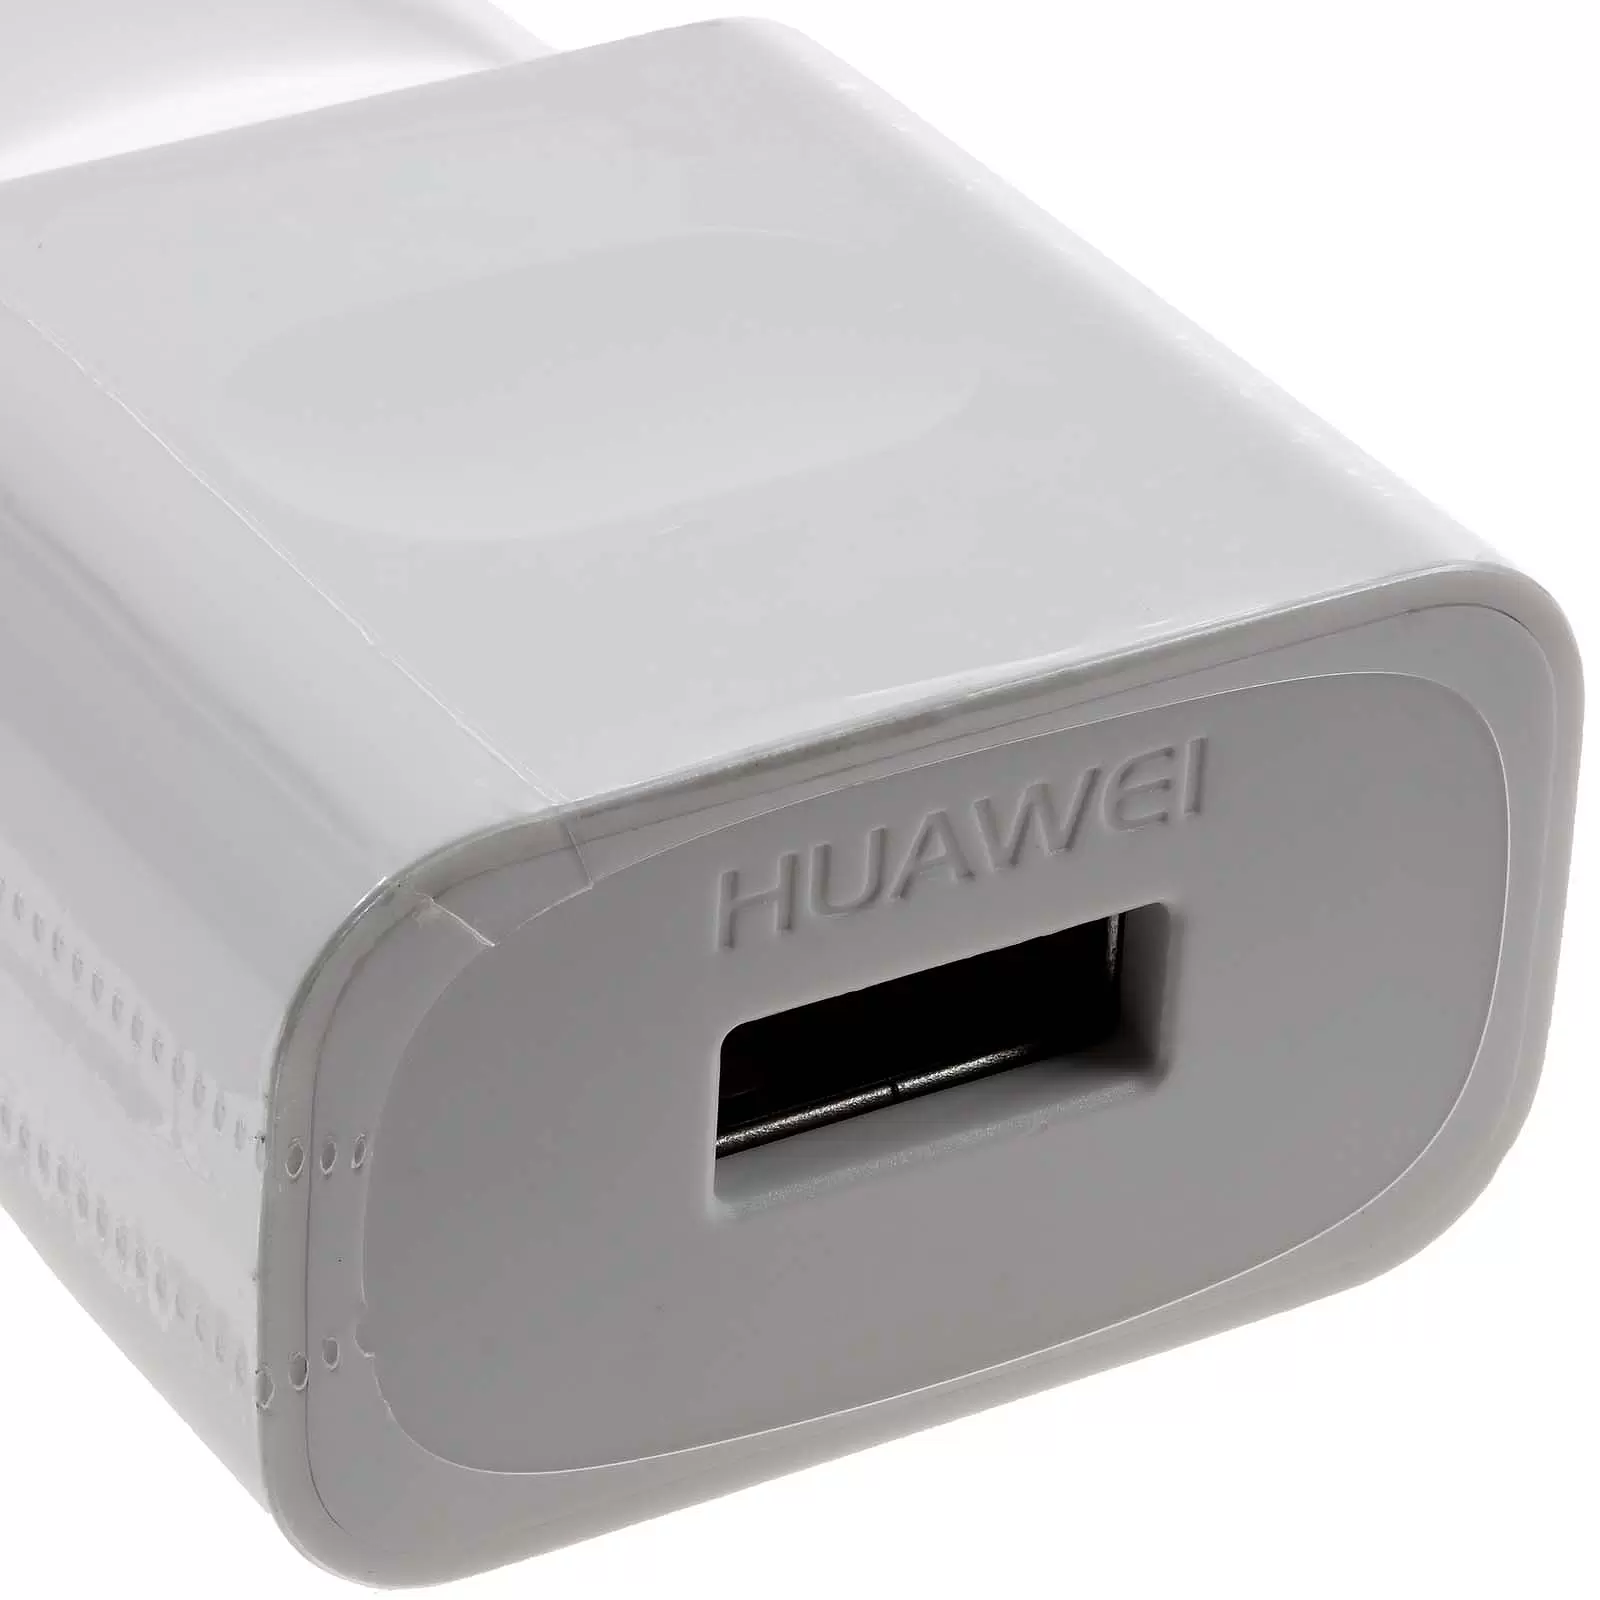 Huawei Micro-USB Ladeadatper, Ladegerät HW-050100E01 z.B. für Ascend G620 weiß